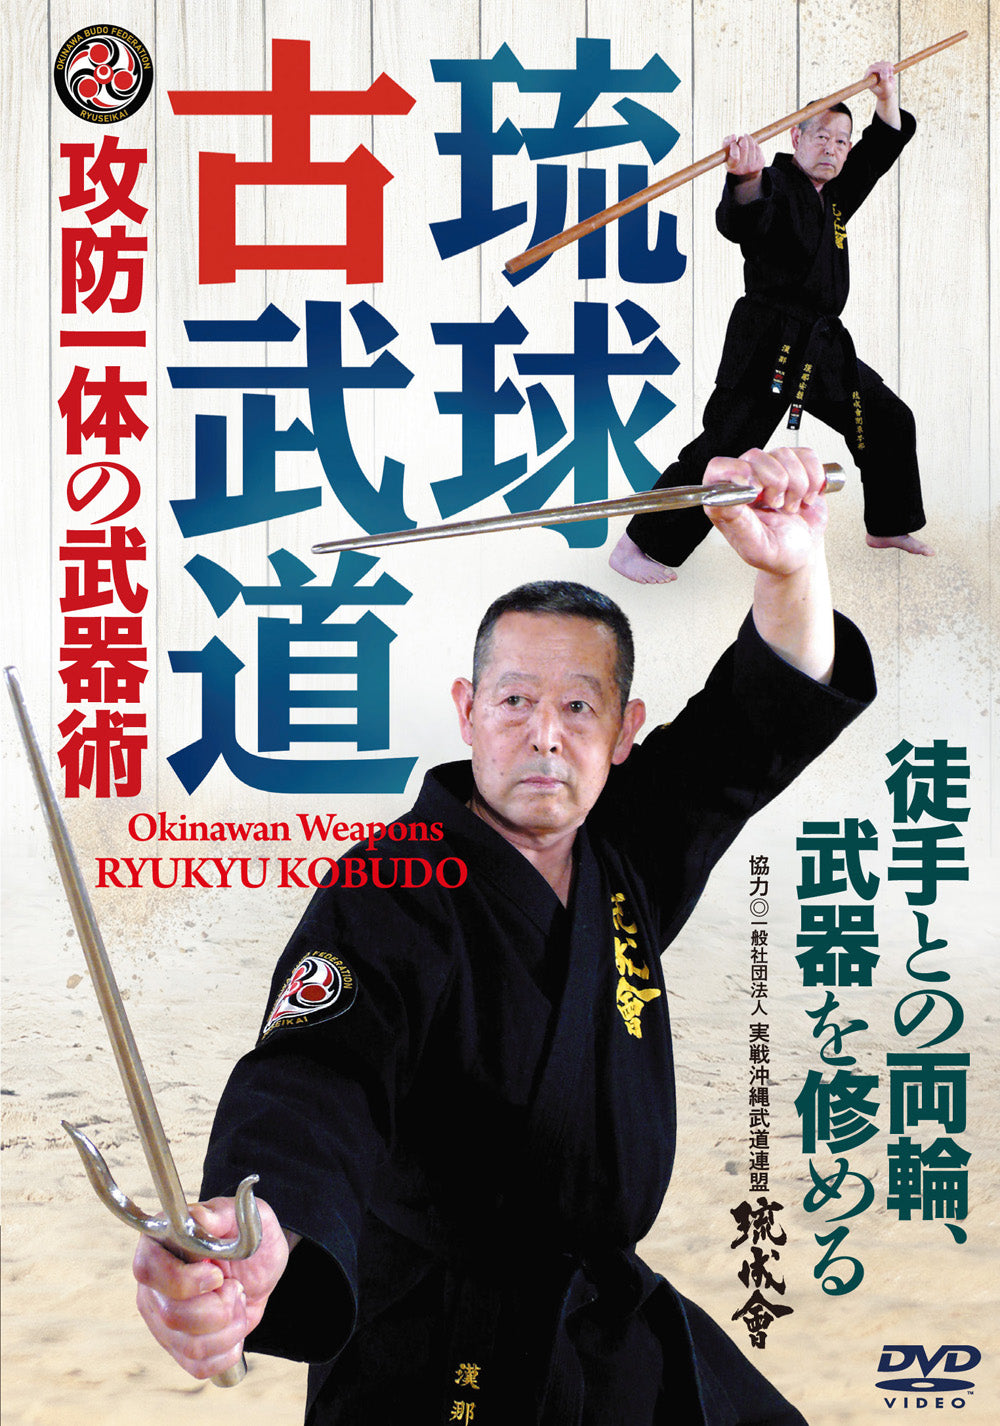 Ryukyu Kobudo Okinawan Weapons DVD by Yasunori Kanna